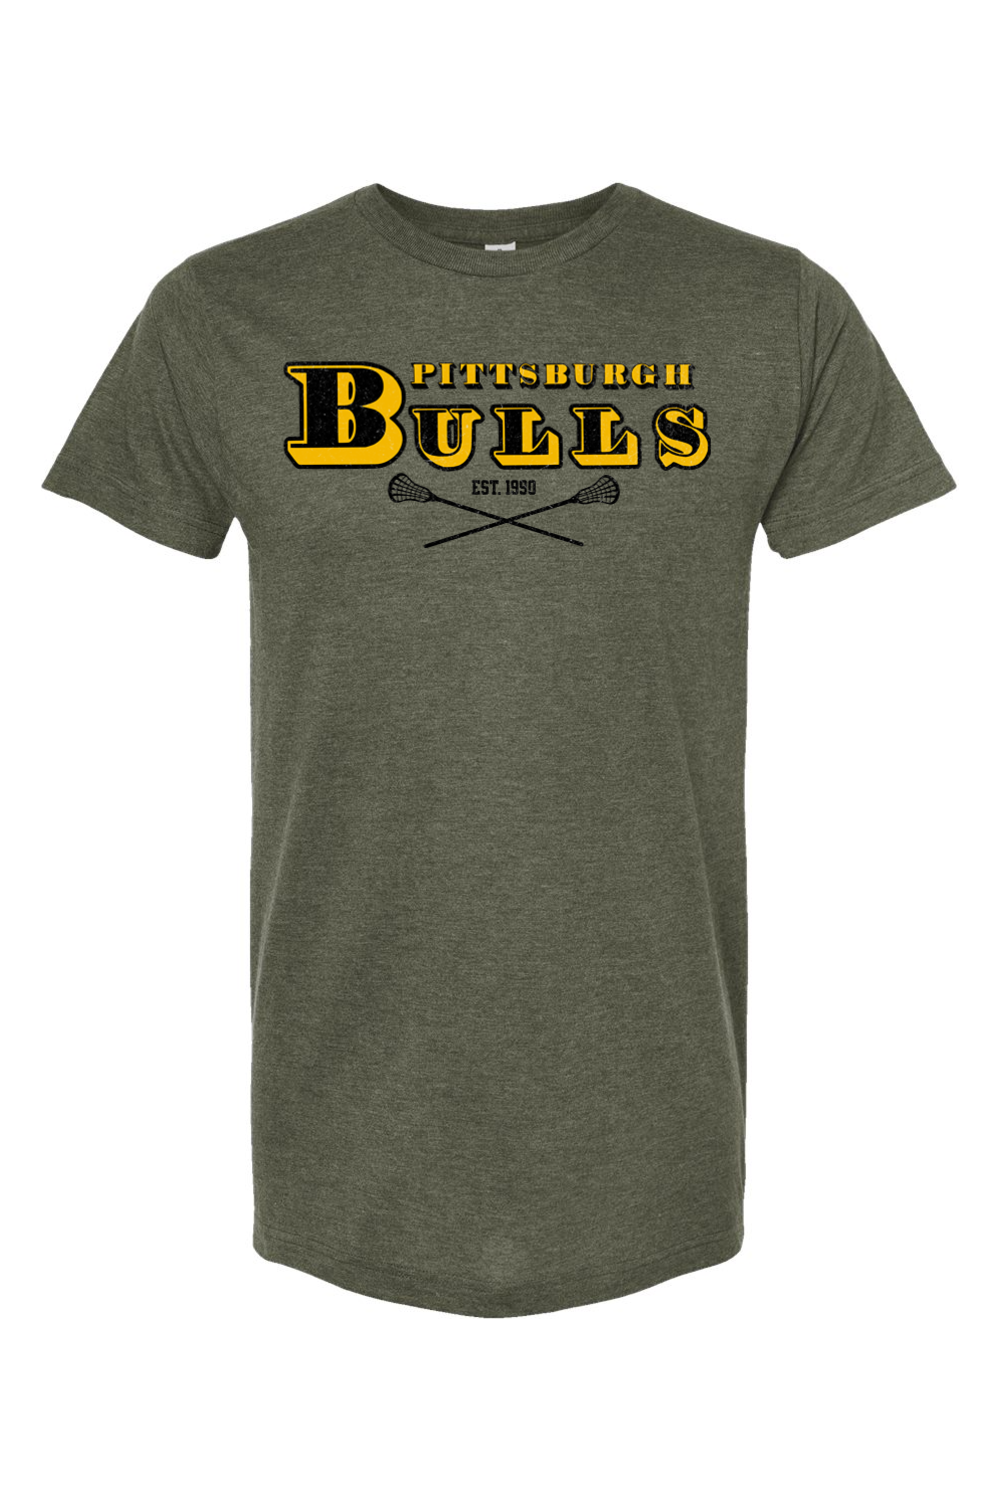 Pittsburgh Bulls Lacrosse - 1990 - Yinzylvania